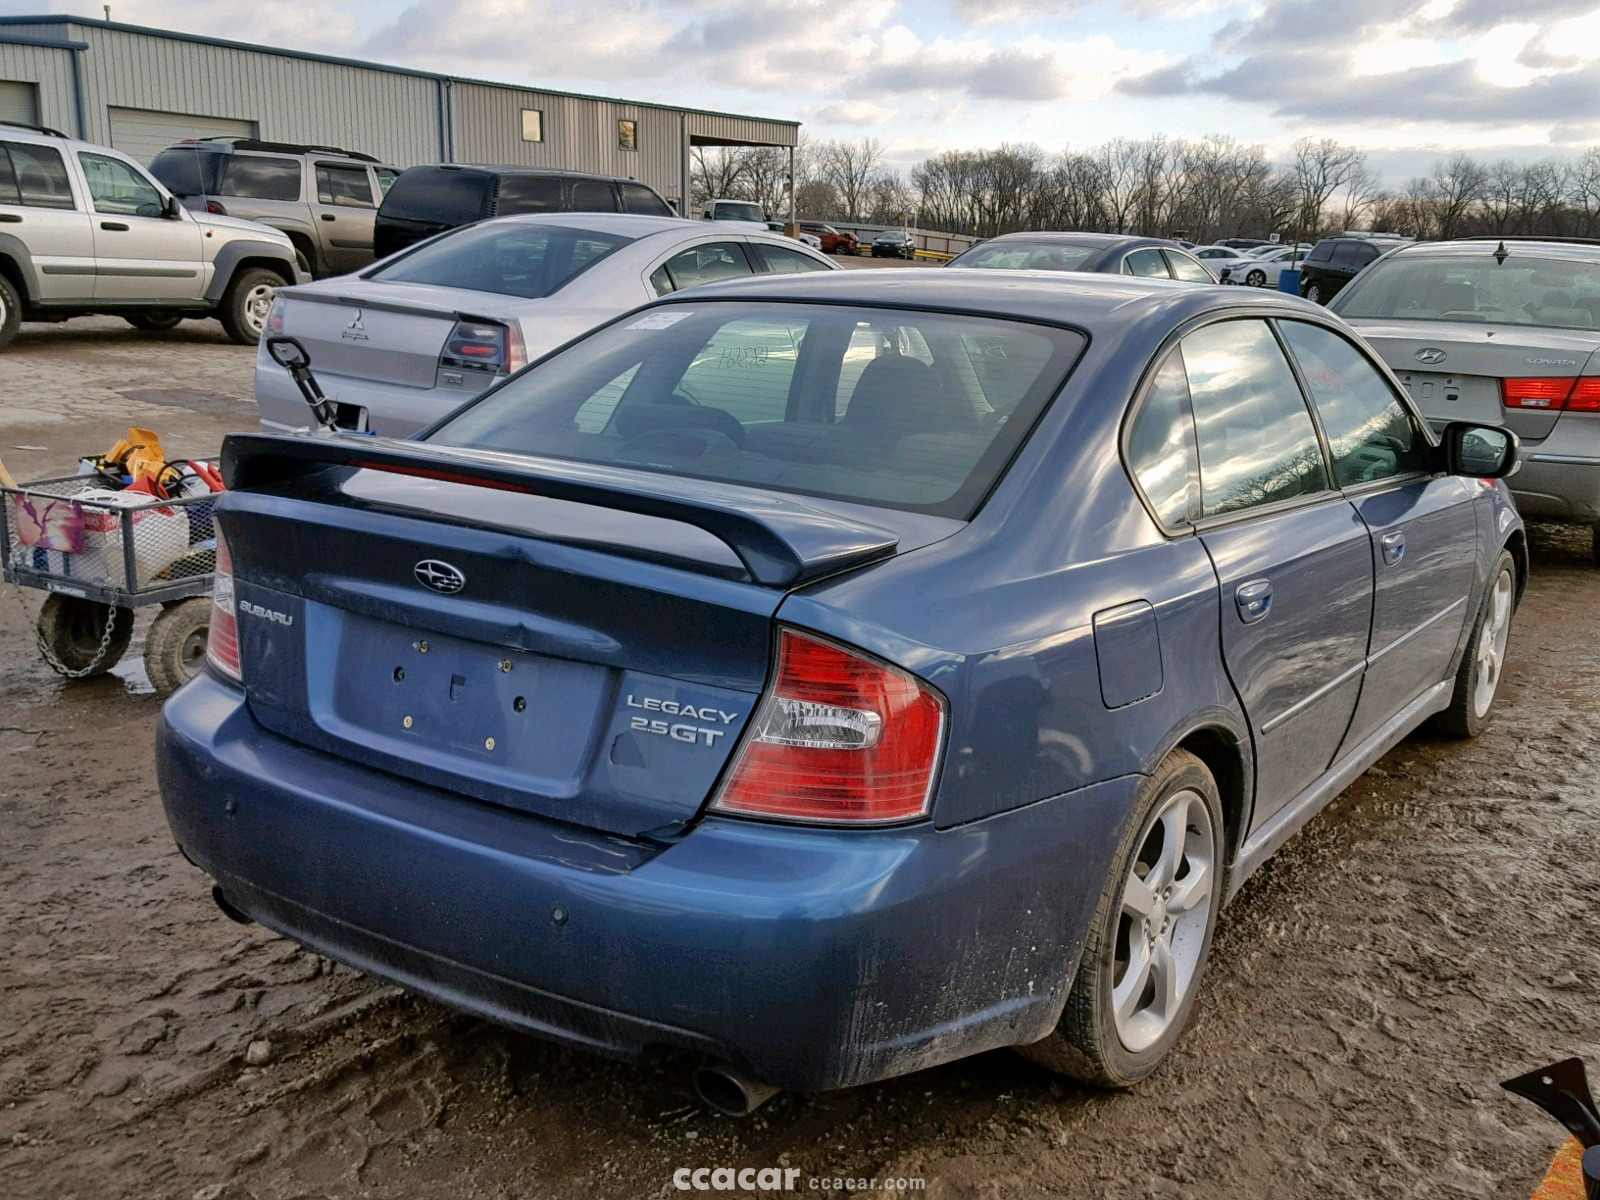 2005 Subaru Legacy 2.5 GT Salvage & Damaged Cars for Sale